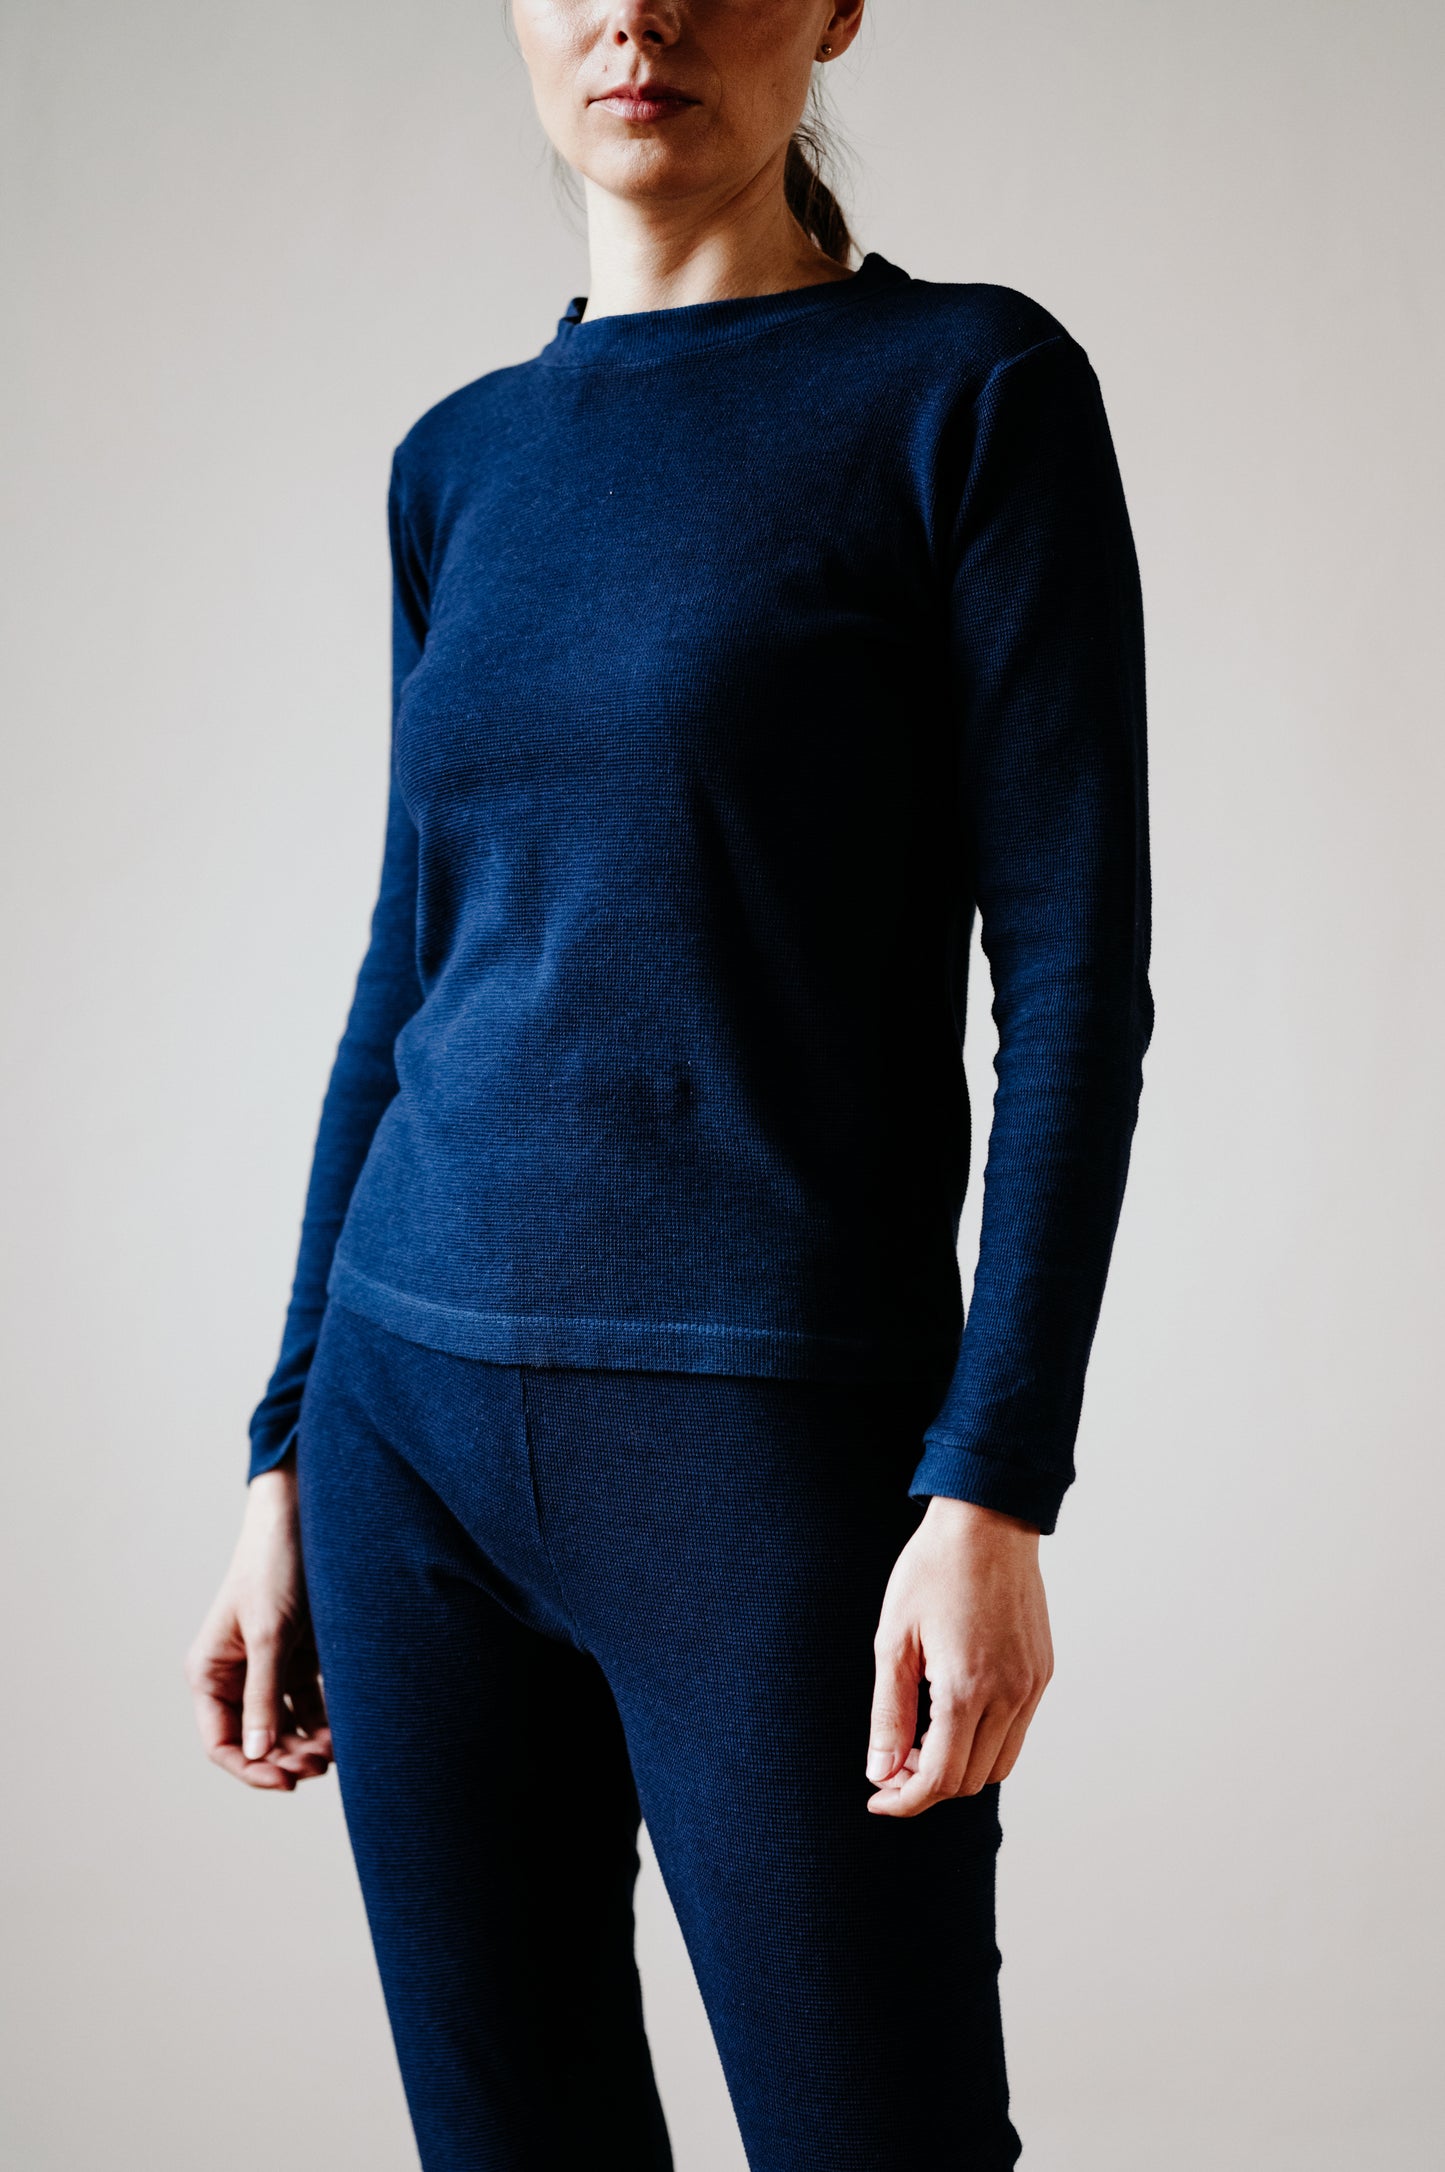 UNI indigo adult long-sleeved top | dospelácke tričko s dlhým rukávom indigo - CZULA